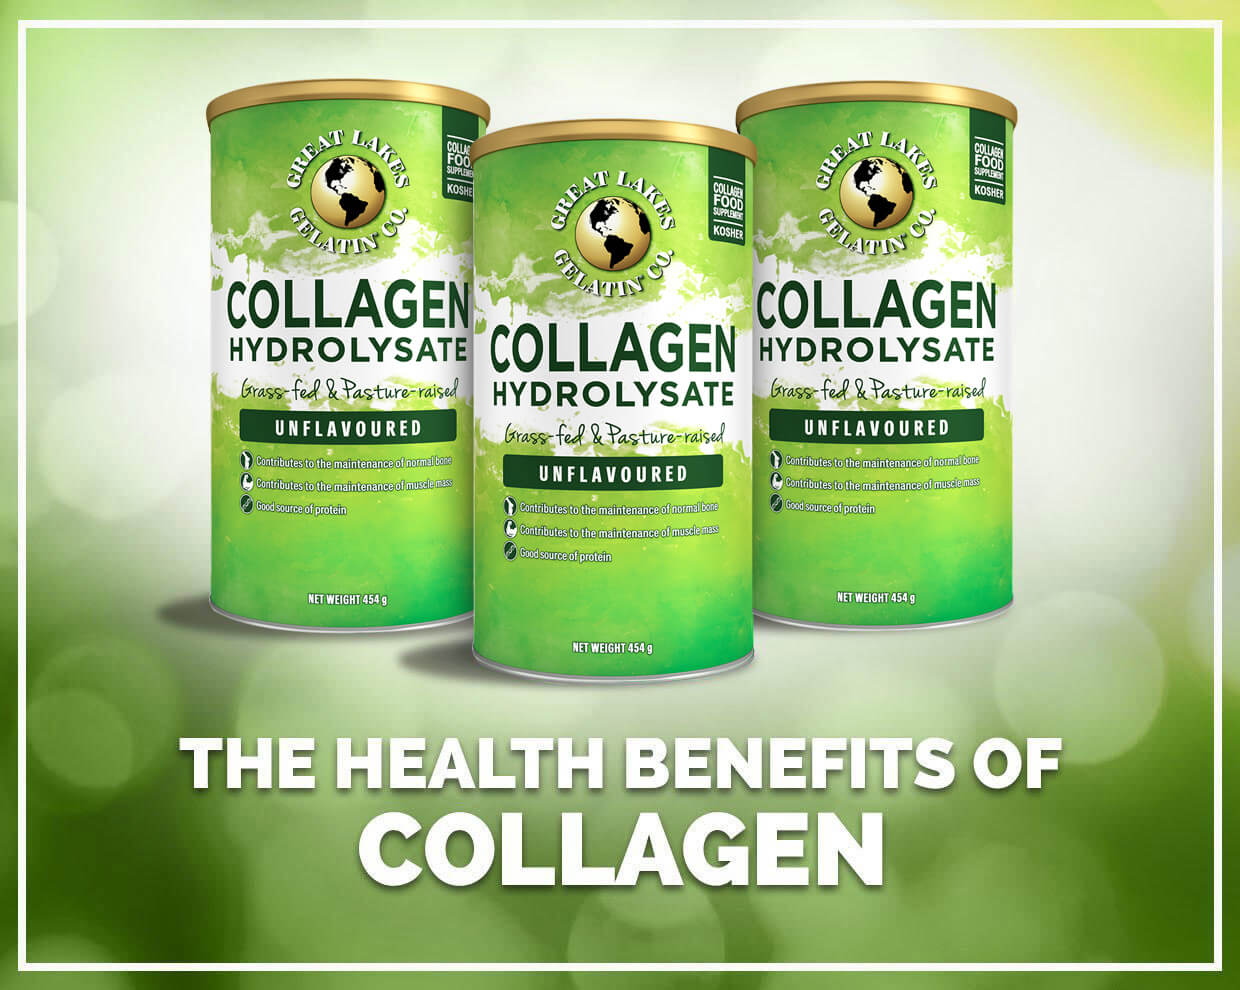 The health benefits of collagen